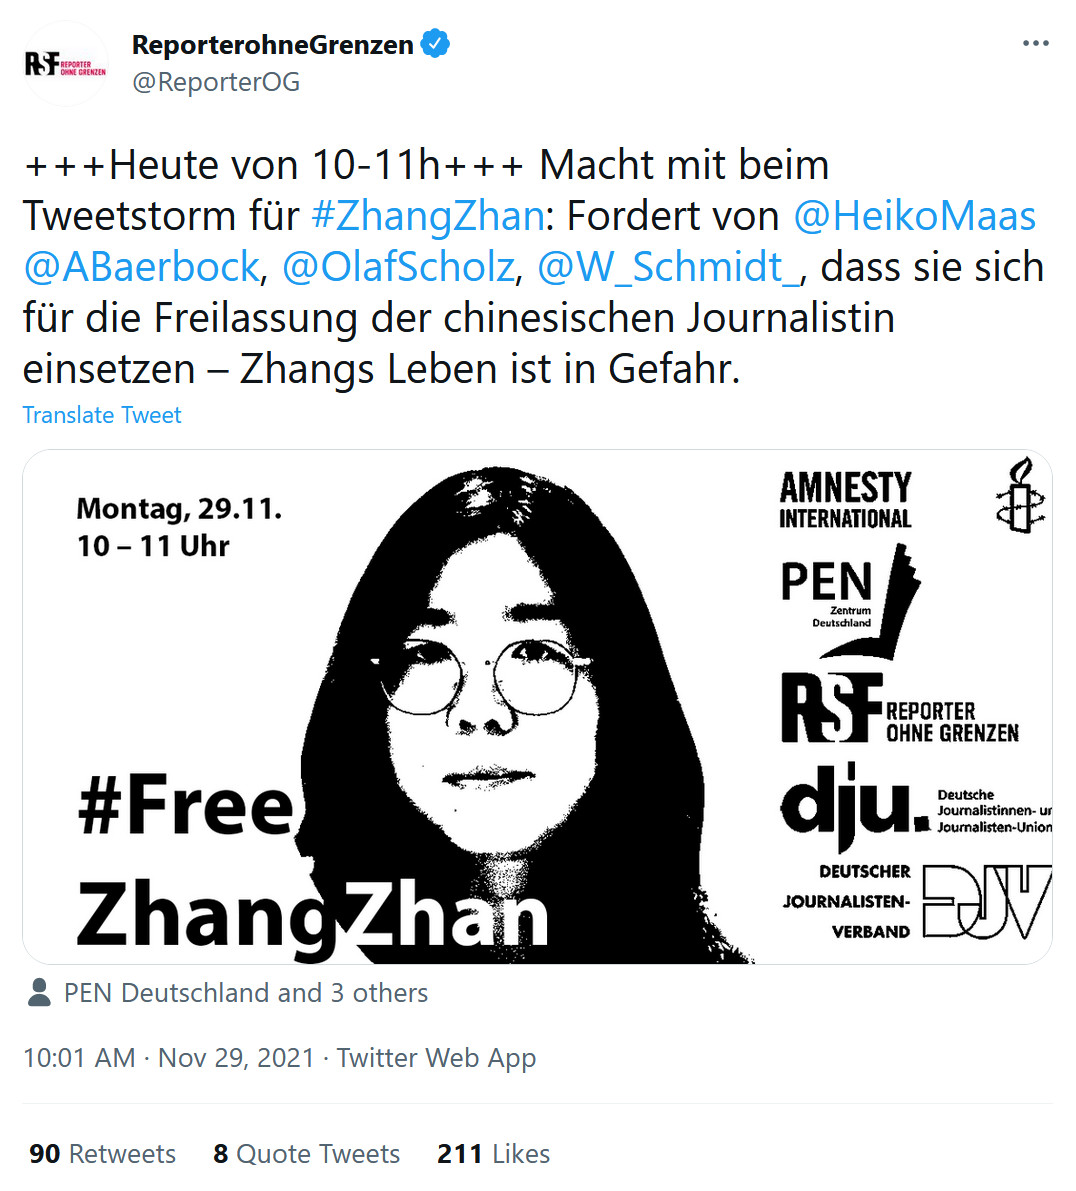 New on MoA:
German NGOs And Newspapers Propagandize Chinese 'Querdenker' Zhang Zhan
moonofalabama.org/2021/11/german…
#ZhangZhan